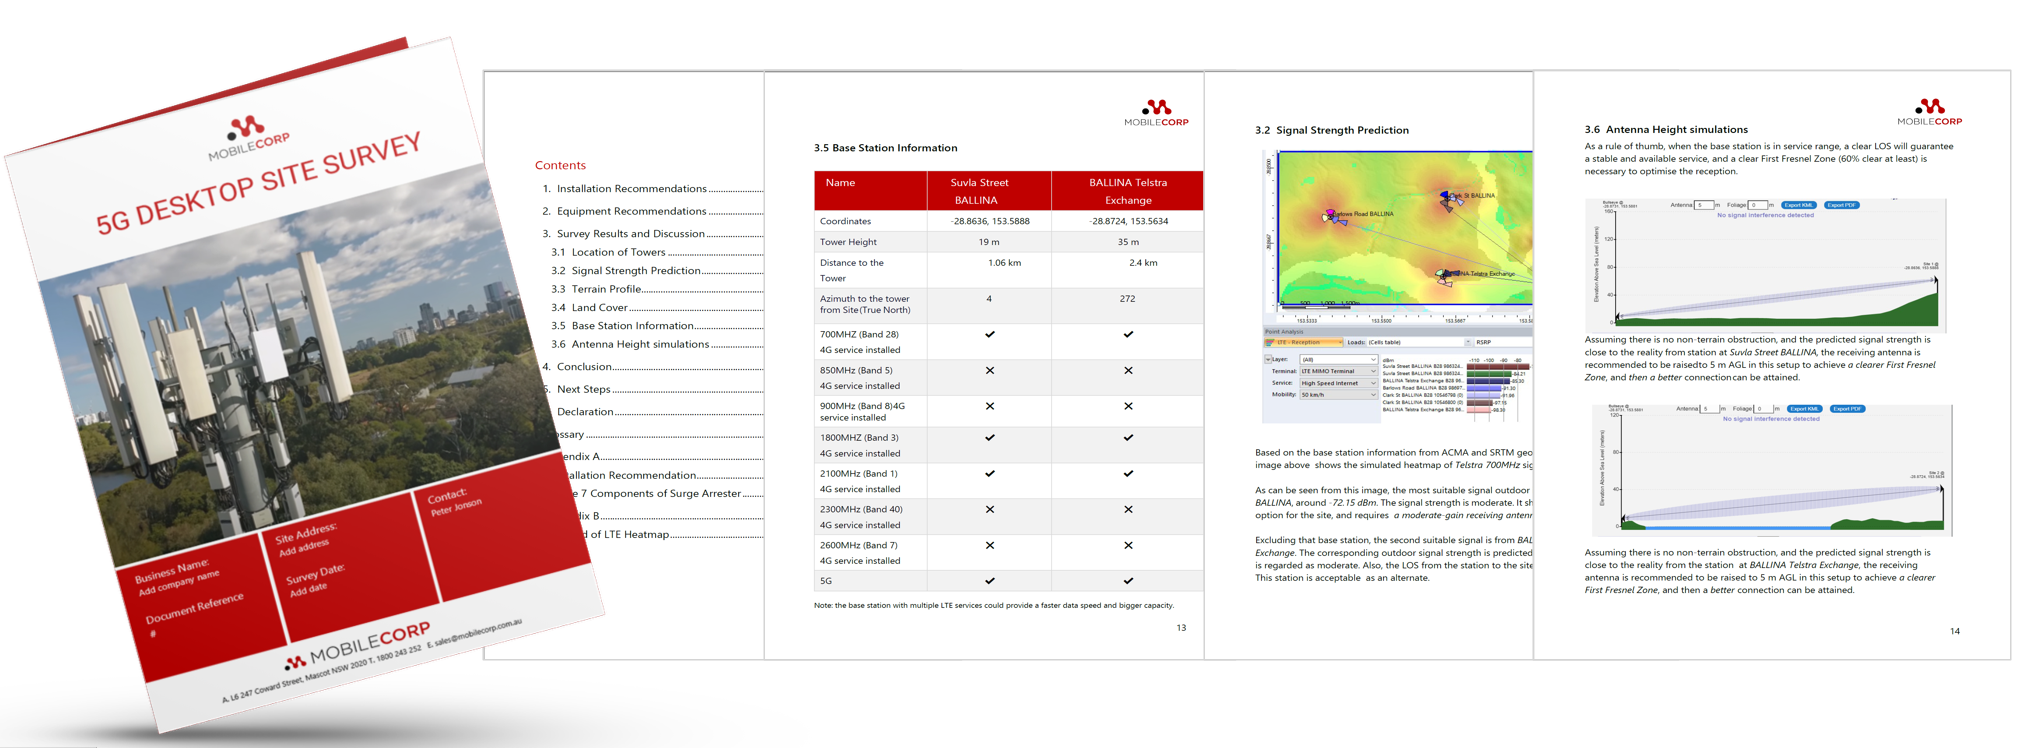 LP - banner 5g site assessment sample report image